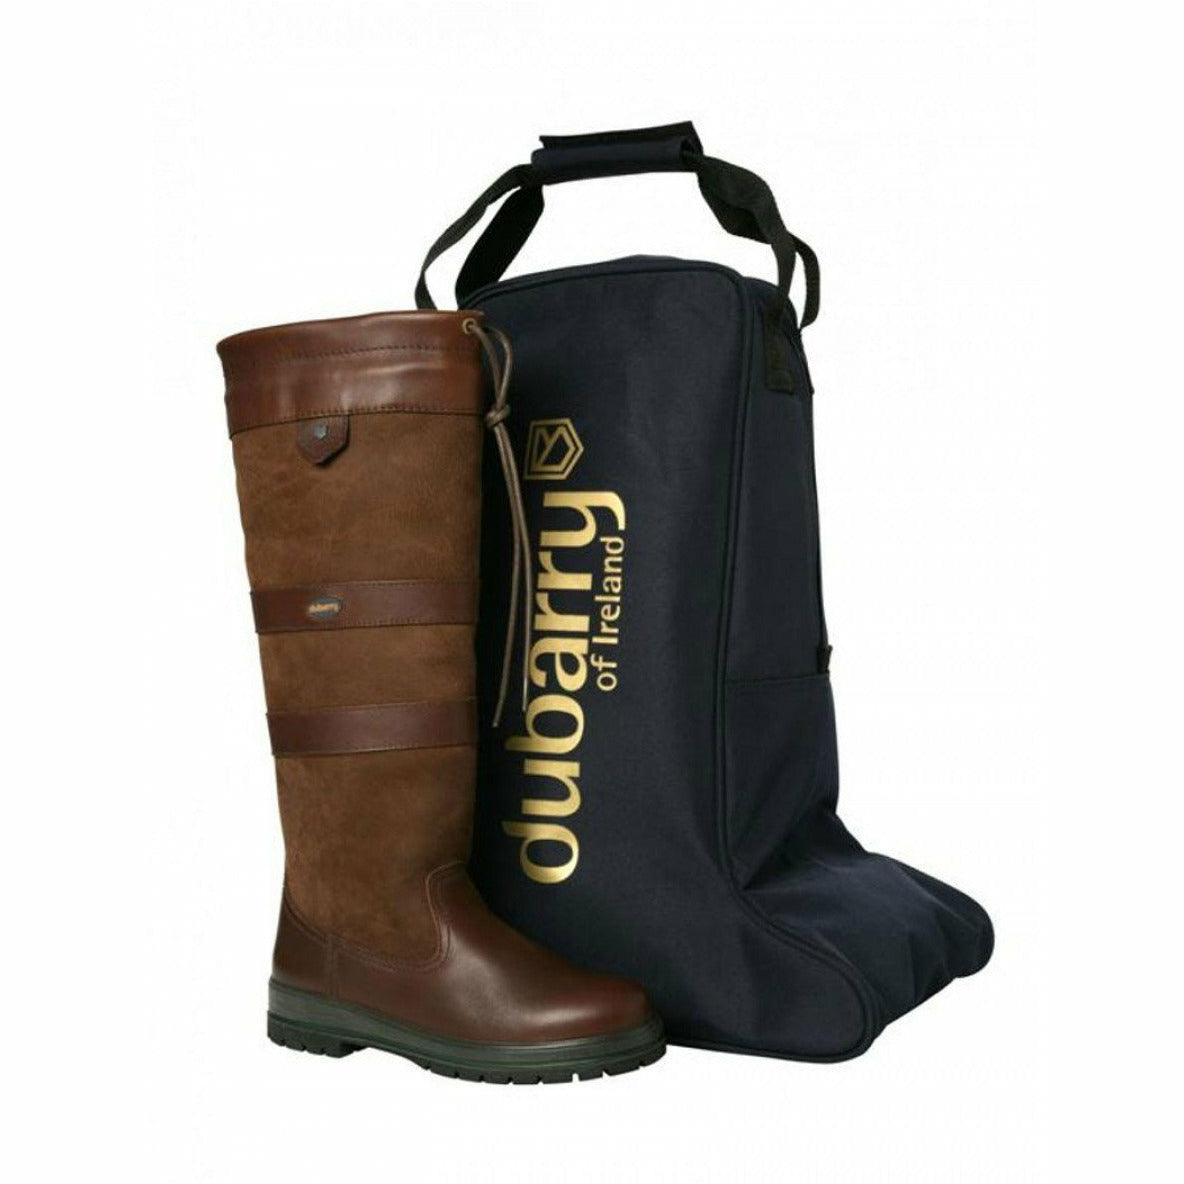 Dubarry Boot Bag